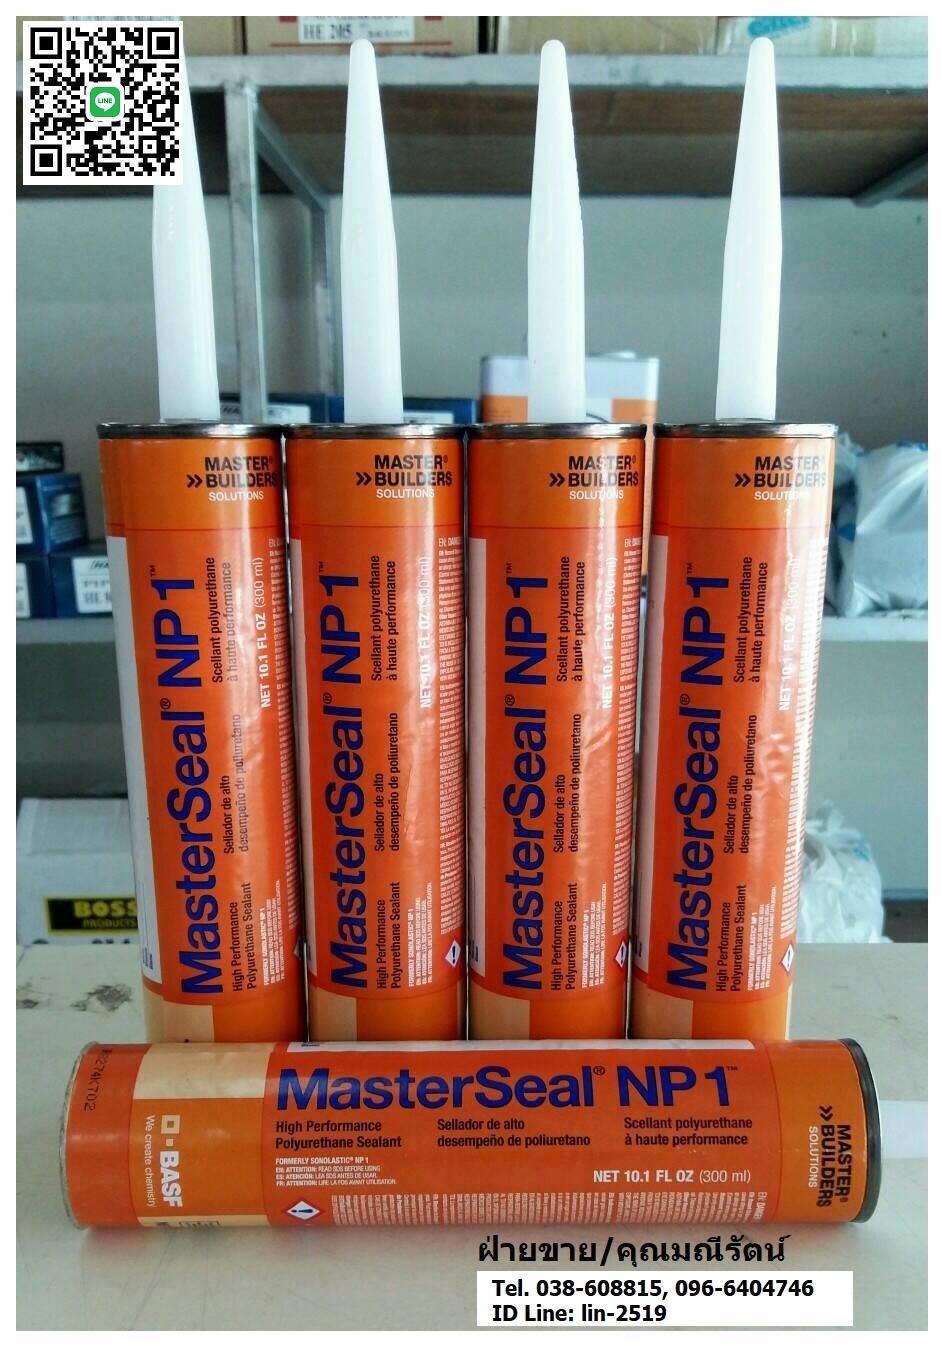 Master Seal NP-1 Polyurethane Sealant (One Part) กาวยาแนวโพลียูรีเทนยาแนว เอ็นพี-วัน กาวยาแนวโพลียูรีเทน สำหรับงานยาแนวรอยต่อต่างๆ ใช้เชื่อมรอยแตกร้าว รอยต่อโครงสร้างอาคาร,กาวพียูยาแนว, เอ็นพีวัน, โพลียูรีเทนยาแนว, ซีลรอยต่อพื้น, ซีลรอยต่อผนังปูน, ยาแนวรอยต่อวัสดุ, NP-1, Master Seal NP-1,,Master Seal NP-1,Sealants and Adhesives/Sealants